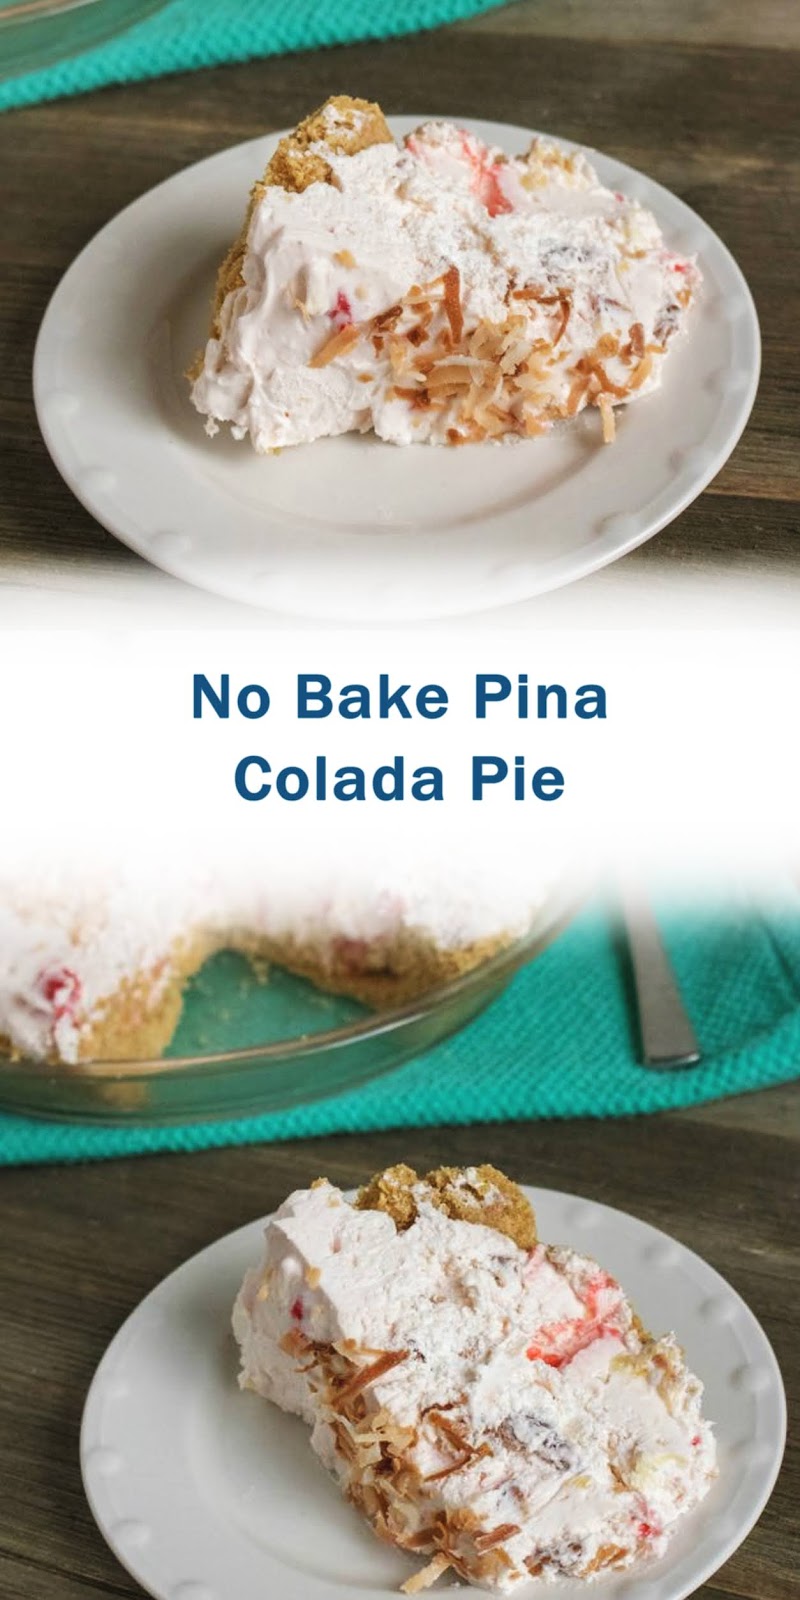 No Bake Pina Colada Pie